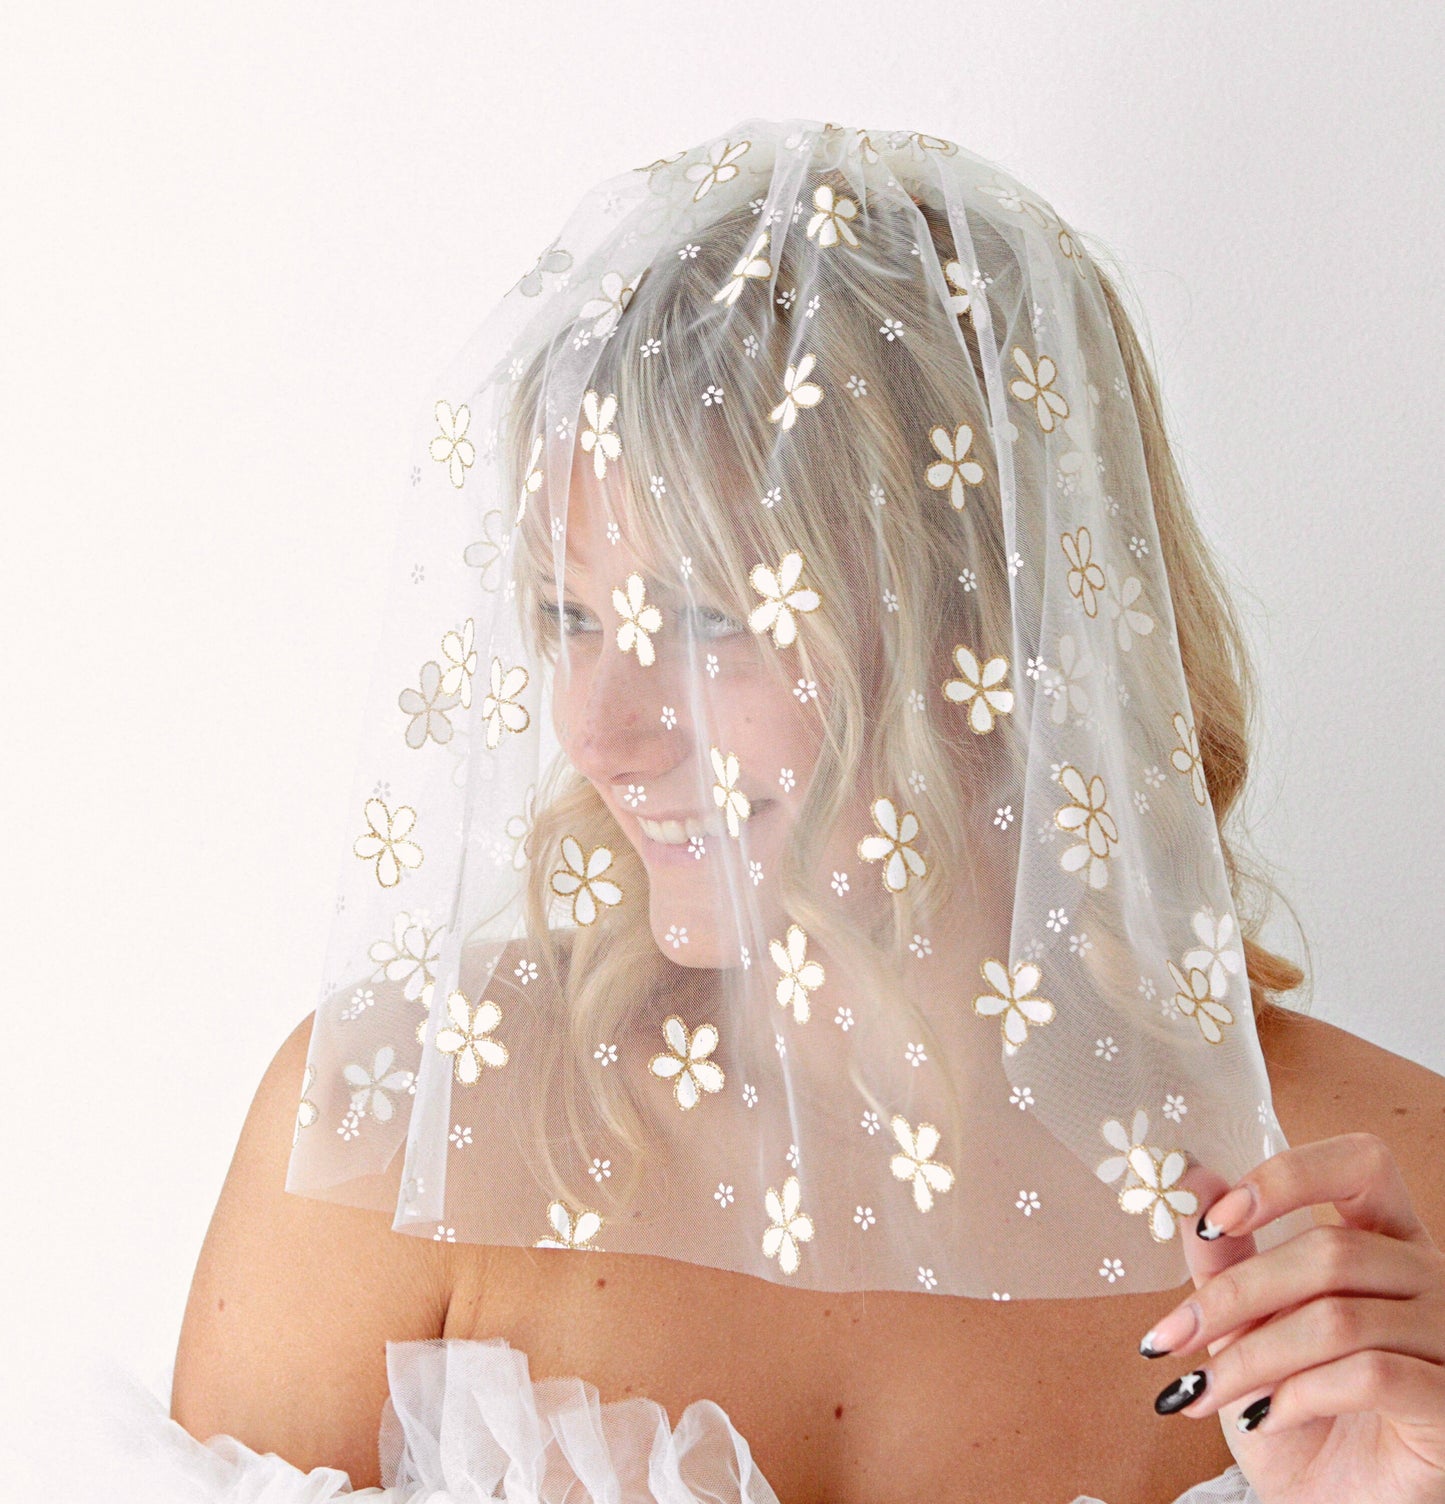 Short floral veil, Wildflower veil, Embroidered flower veil, Floral wedding veil, Bridal veil with flowers, Unique wedding veil